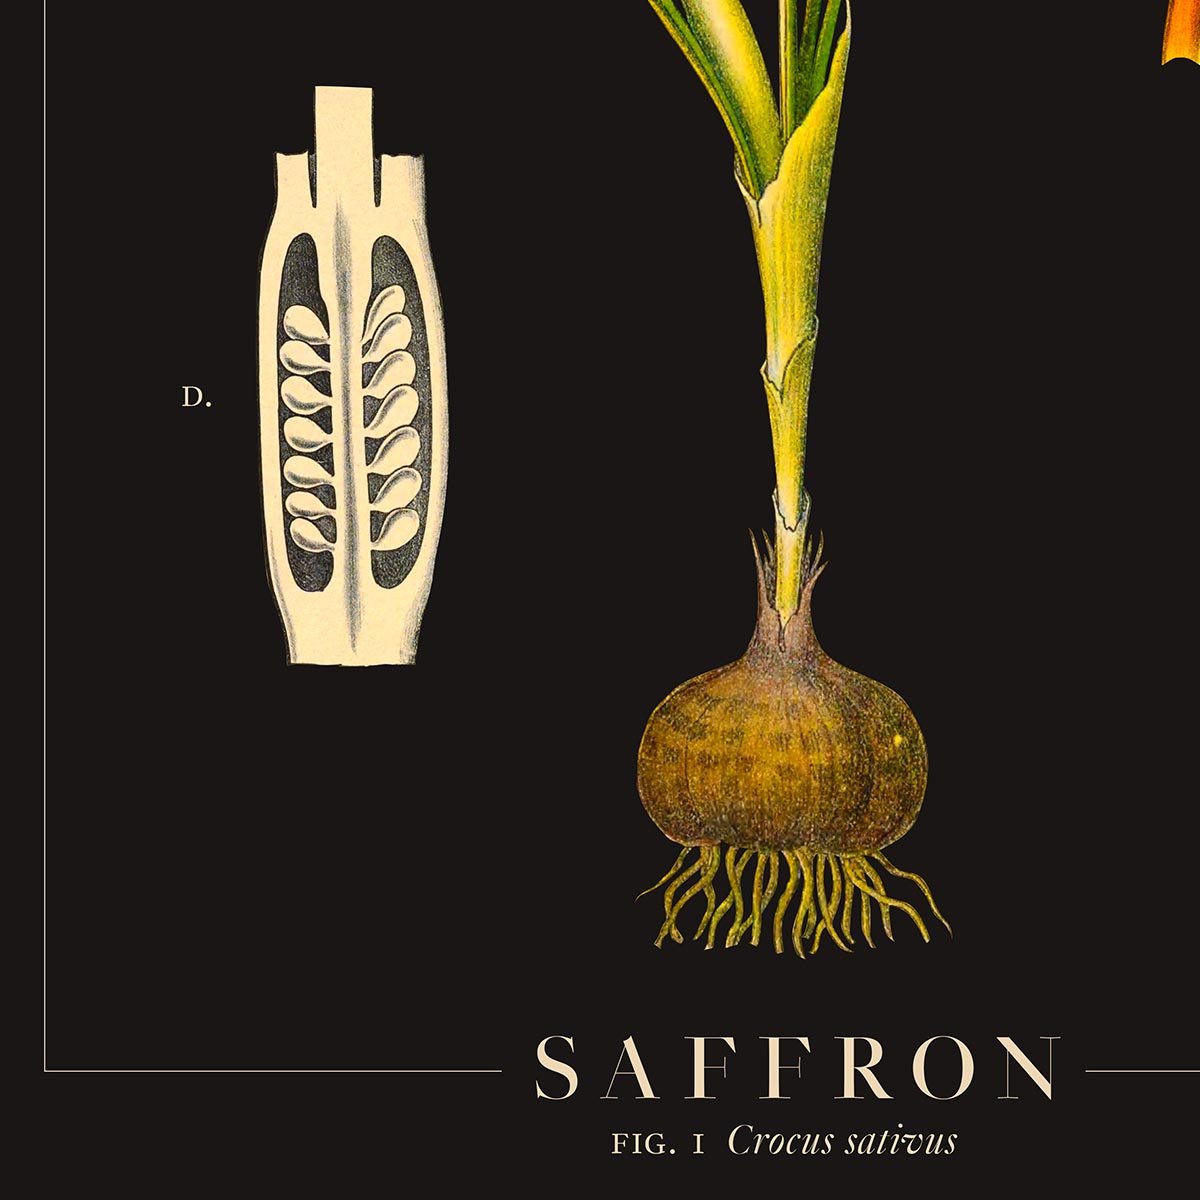 Saffron Botanical Poster